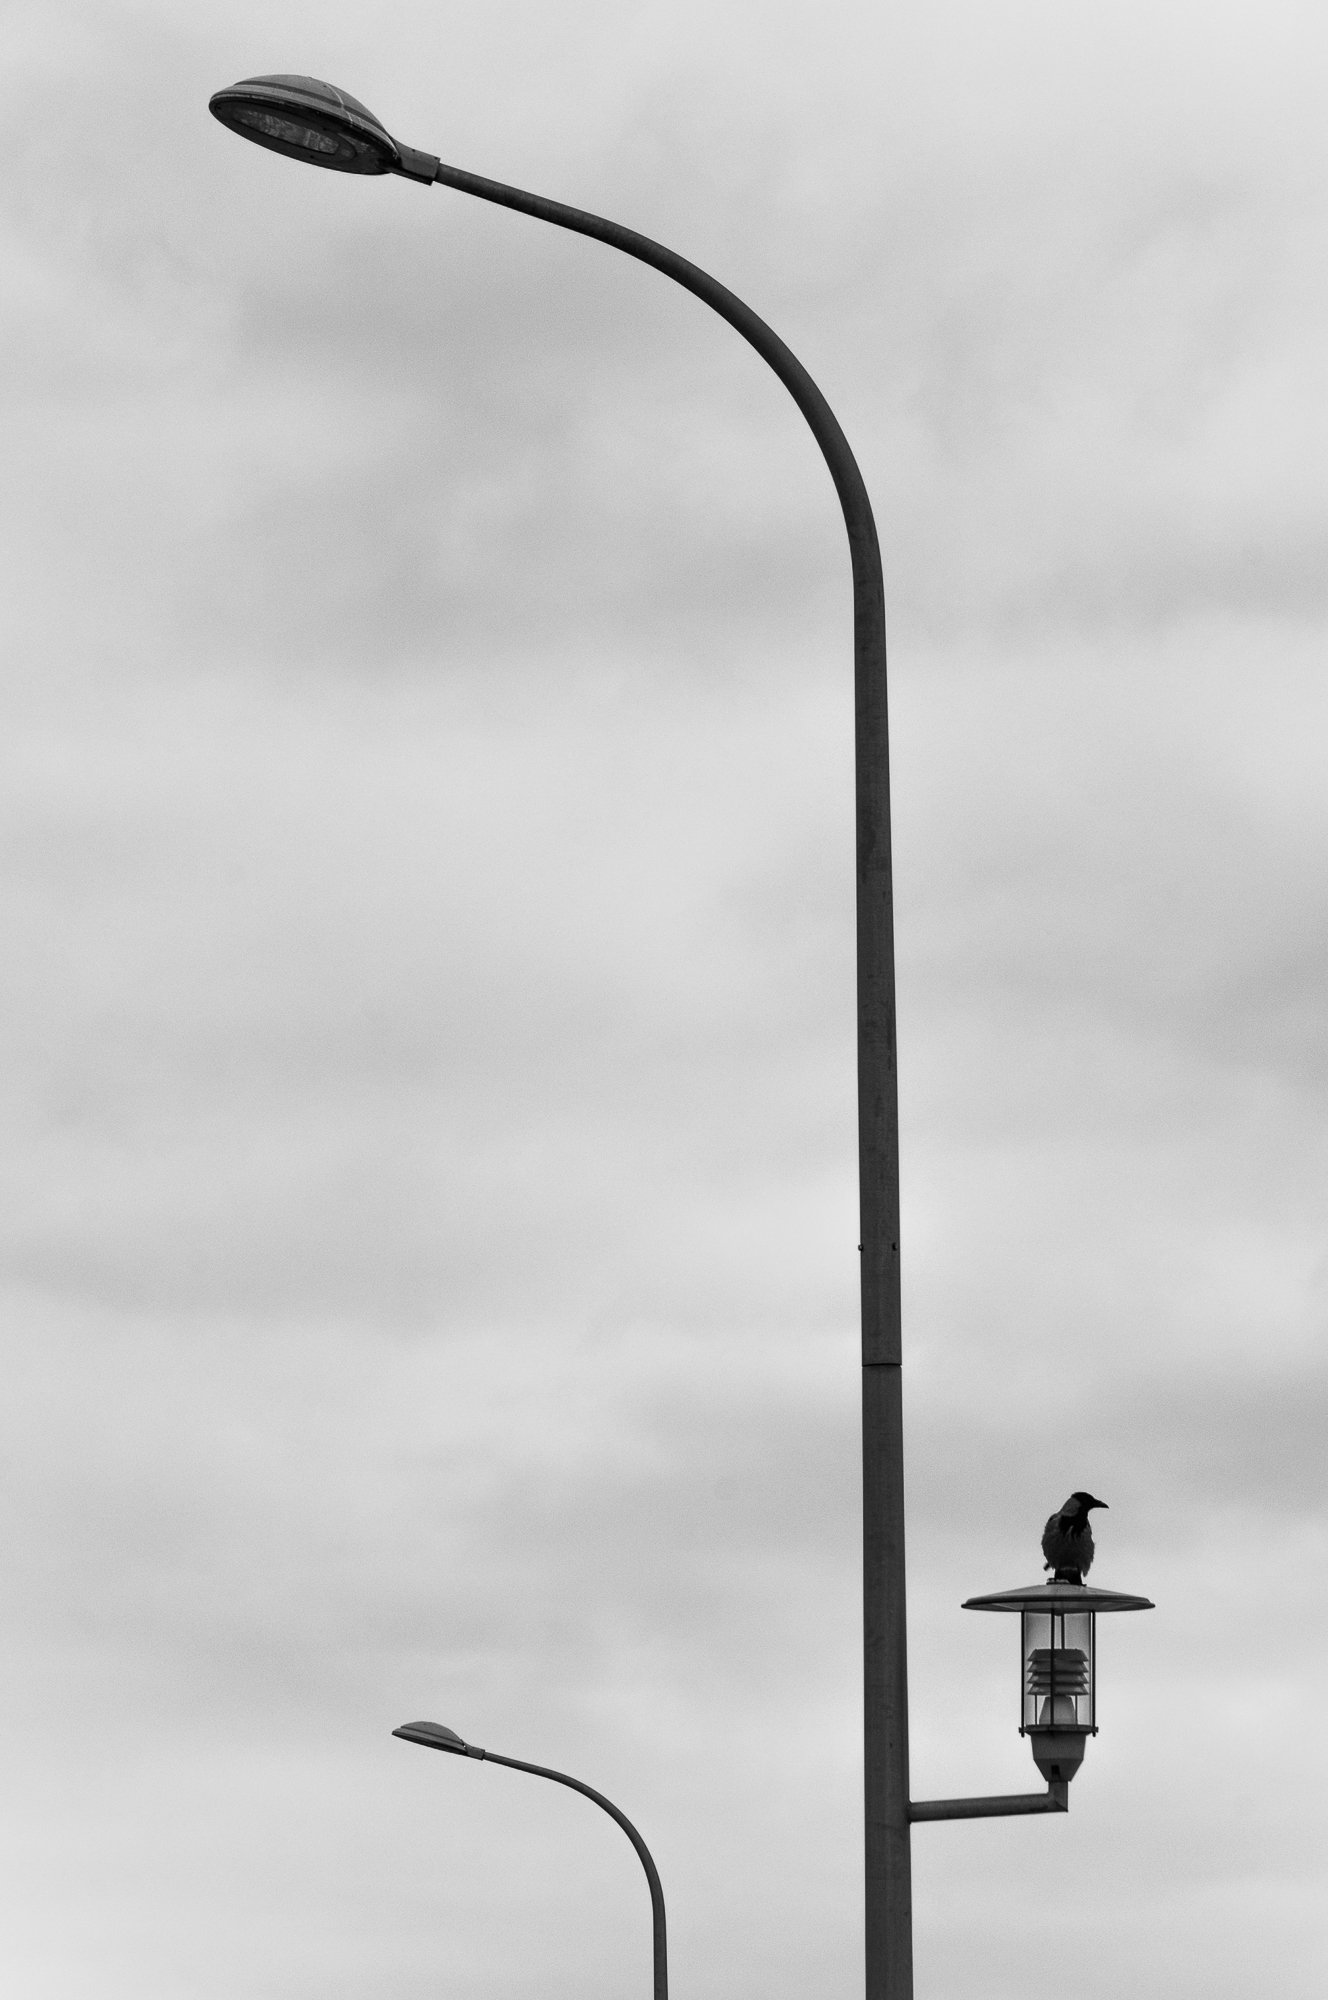 Adam Mazek Photography Warsaw 2018. Minimalism. Bird on the street lamp. "Negation of the End." Animals. "Negacja Końca"